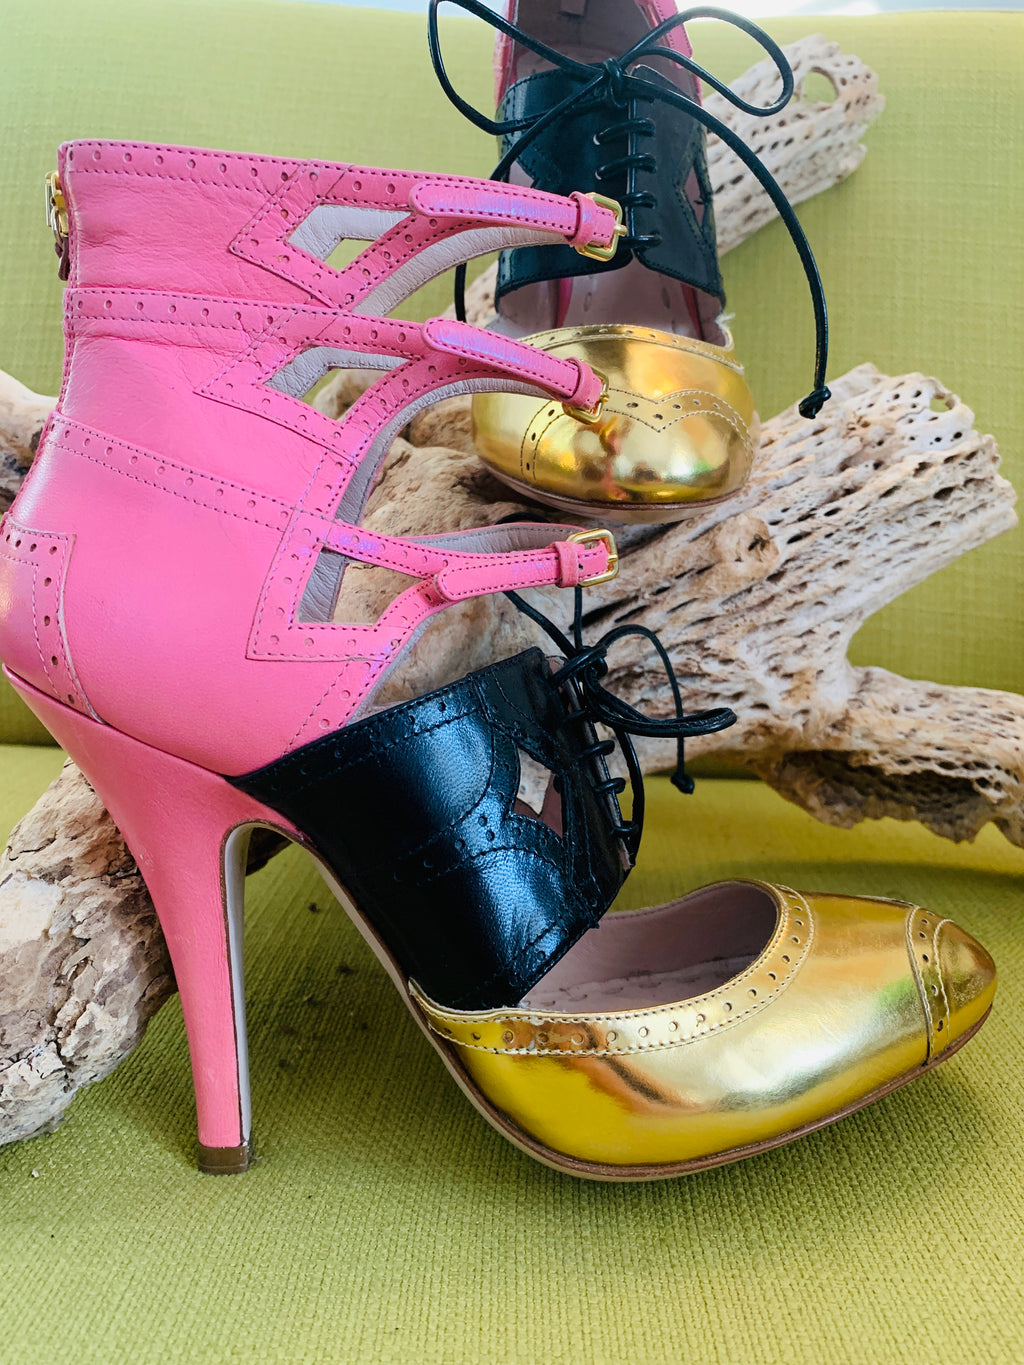 Designer Gold Toe Leather Lace Up Heels ~ Size EU 36.5